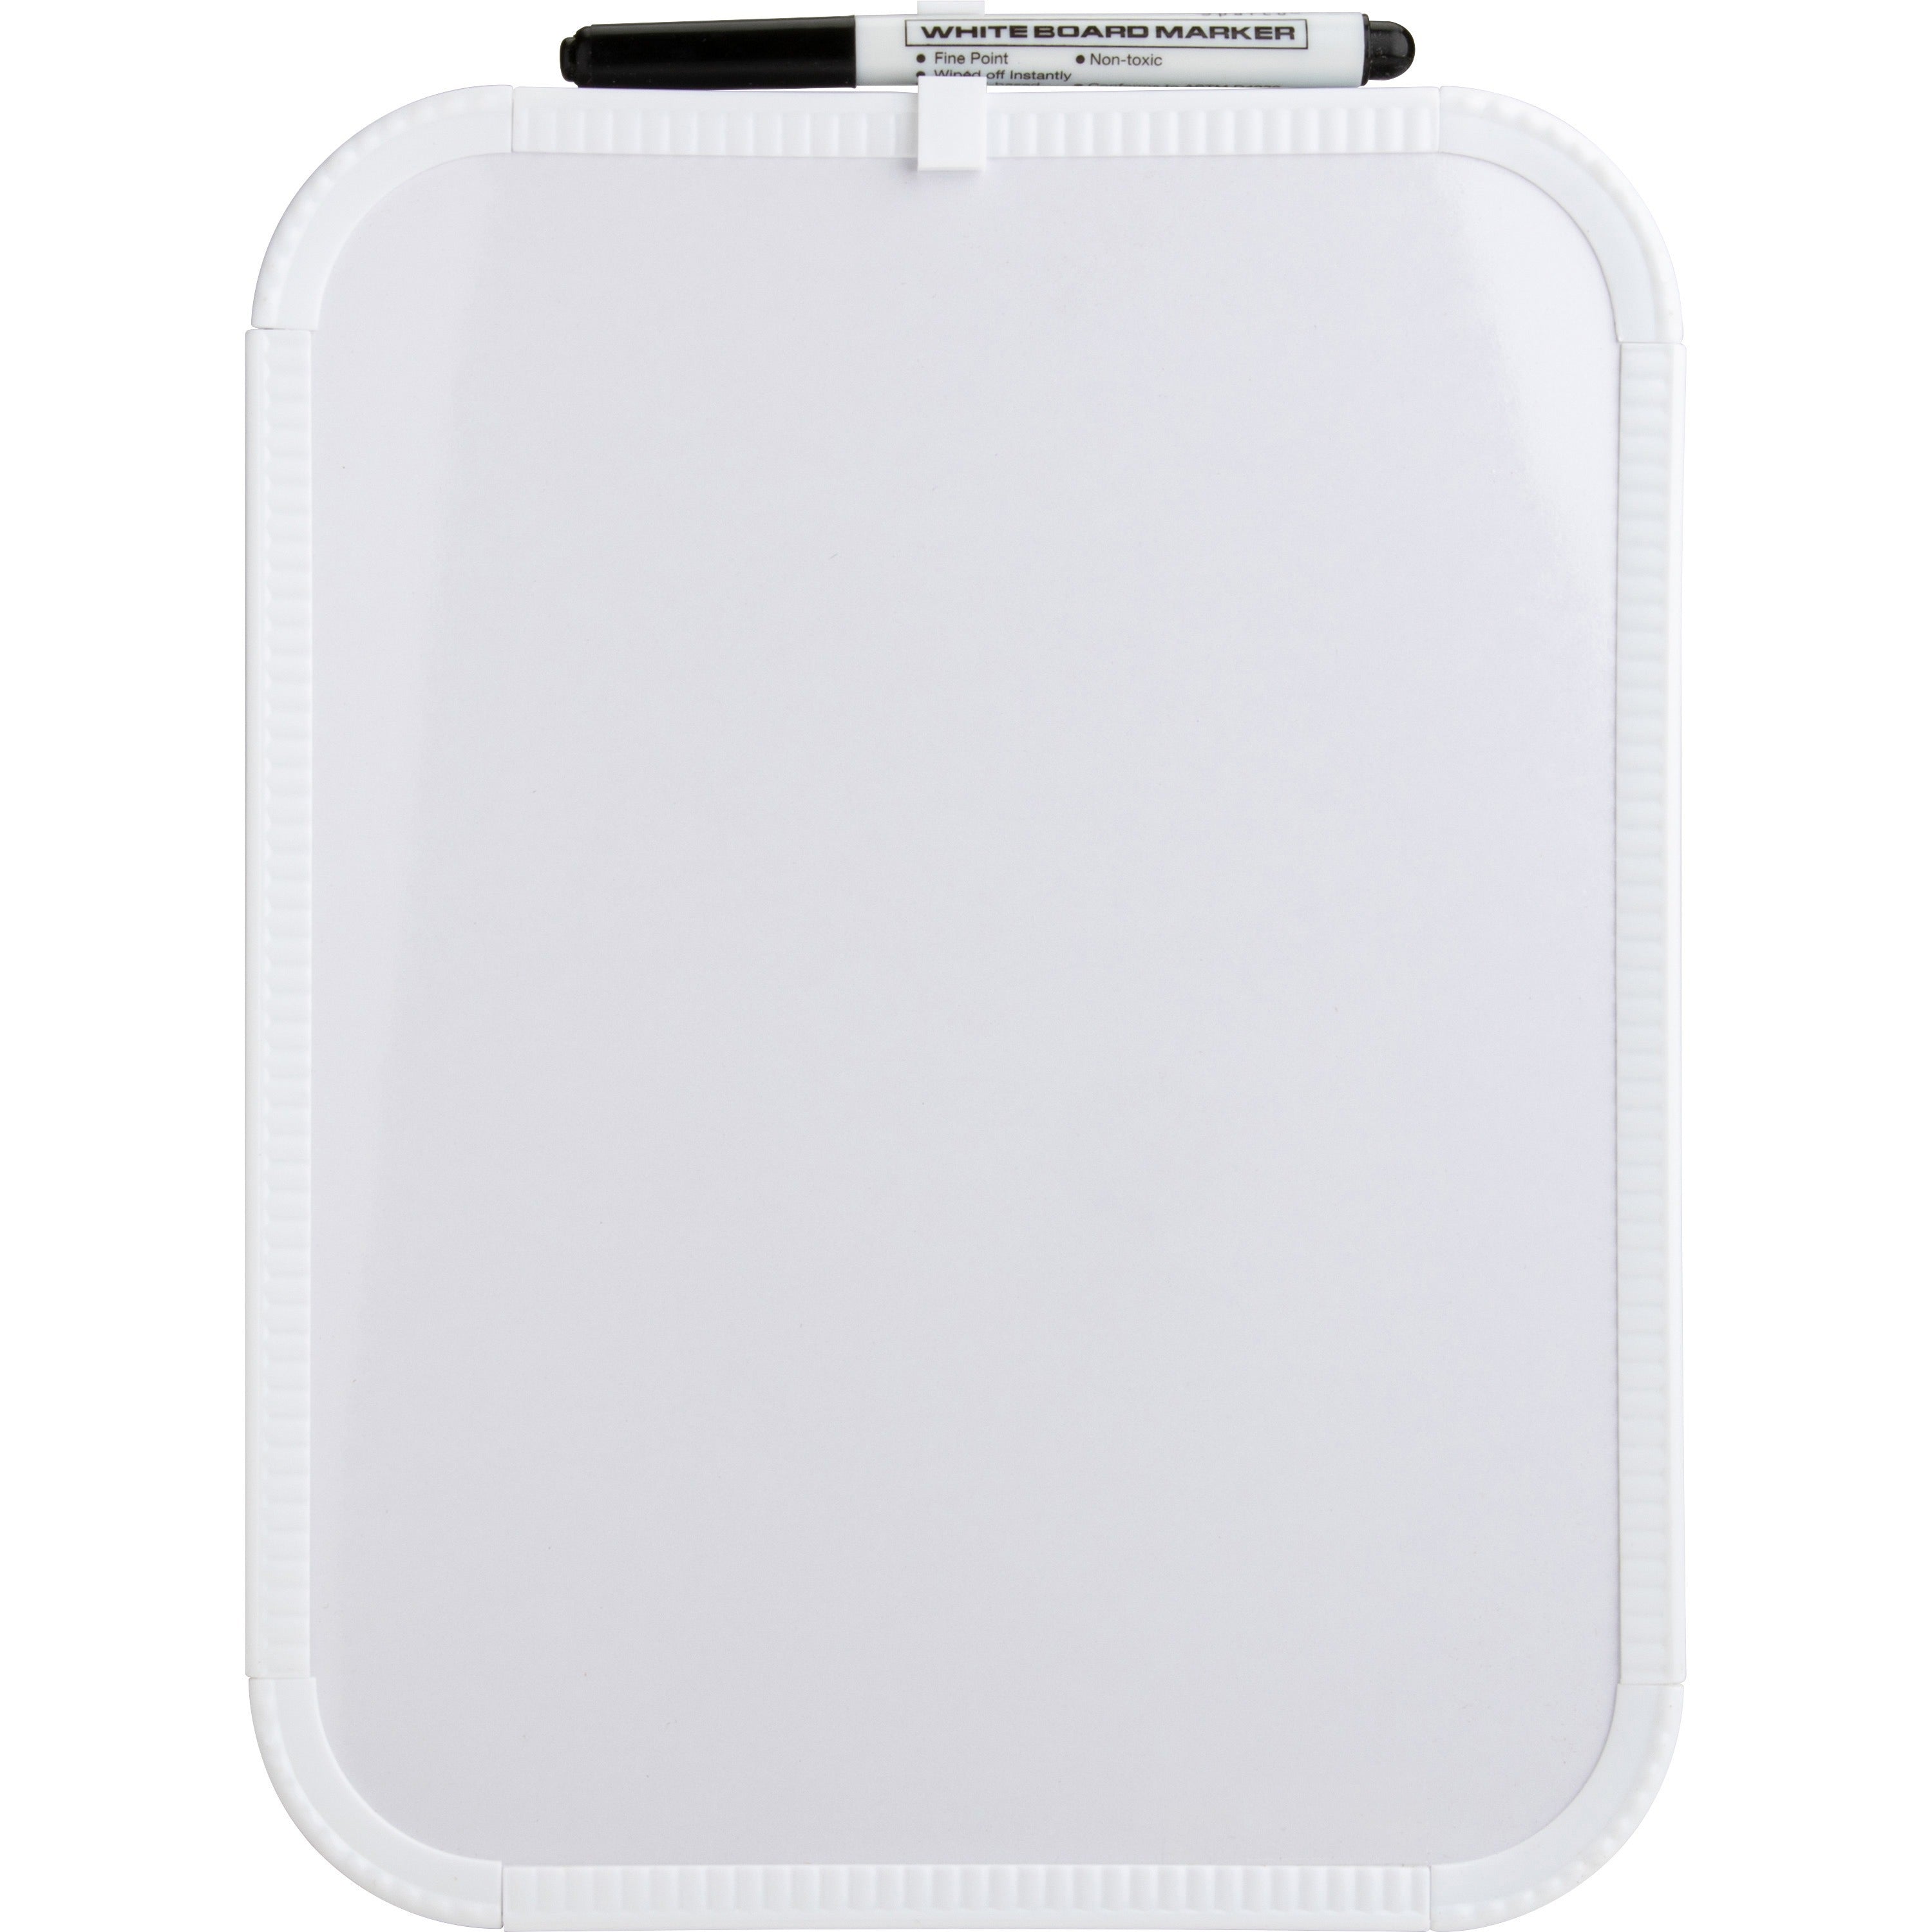 lorell-personal-whiteboard-11-09-ft-width-x-85-07-ft-height-white-melamine-surface-white-plastic-frame-rectangle-1-each_llr75620 - 1